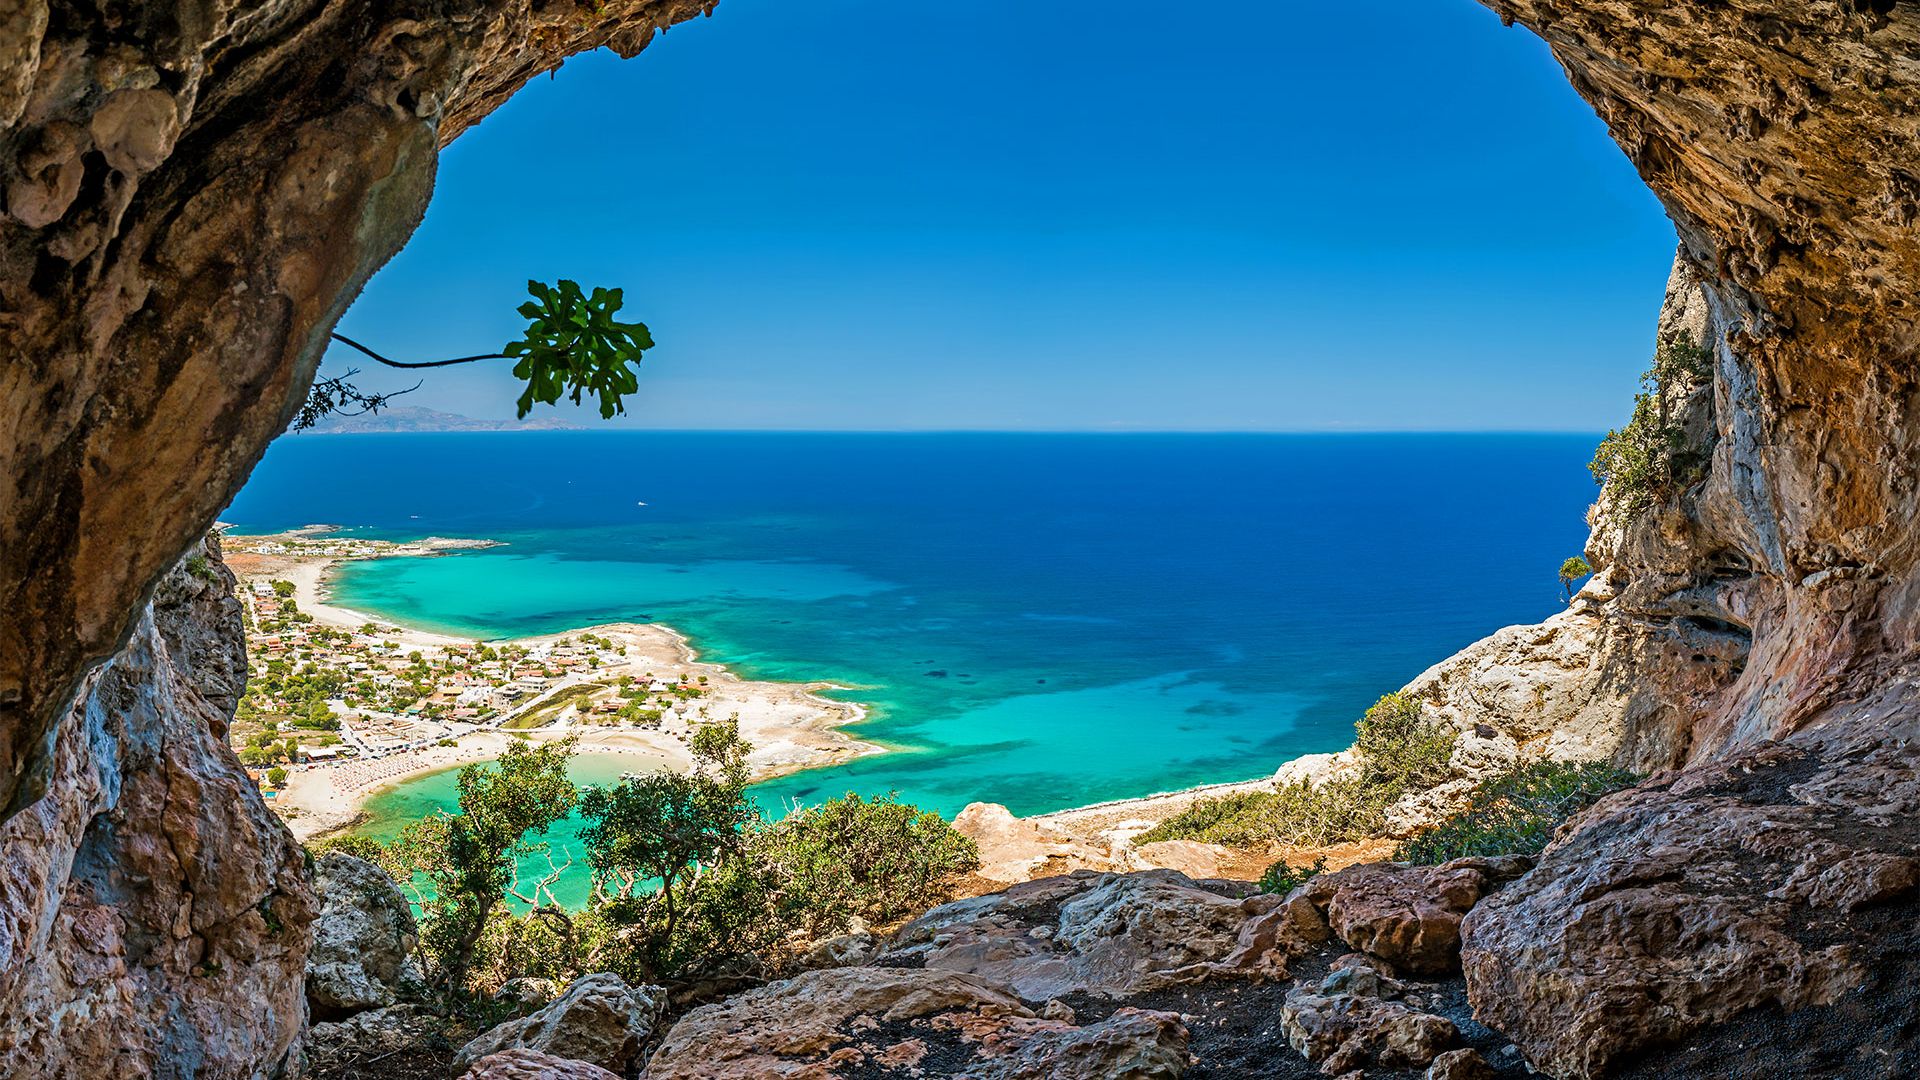 Sejur plaja Creta - Heraklion, Grecia, 11 zile - 5 iulie 2022